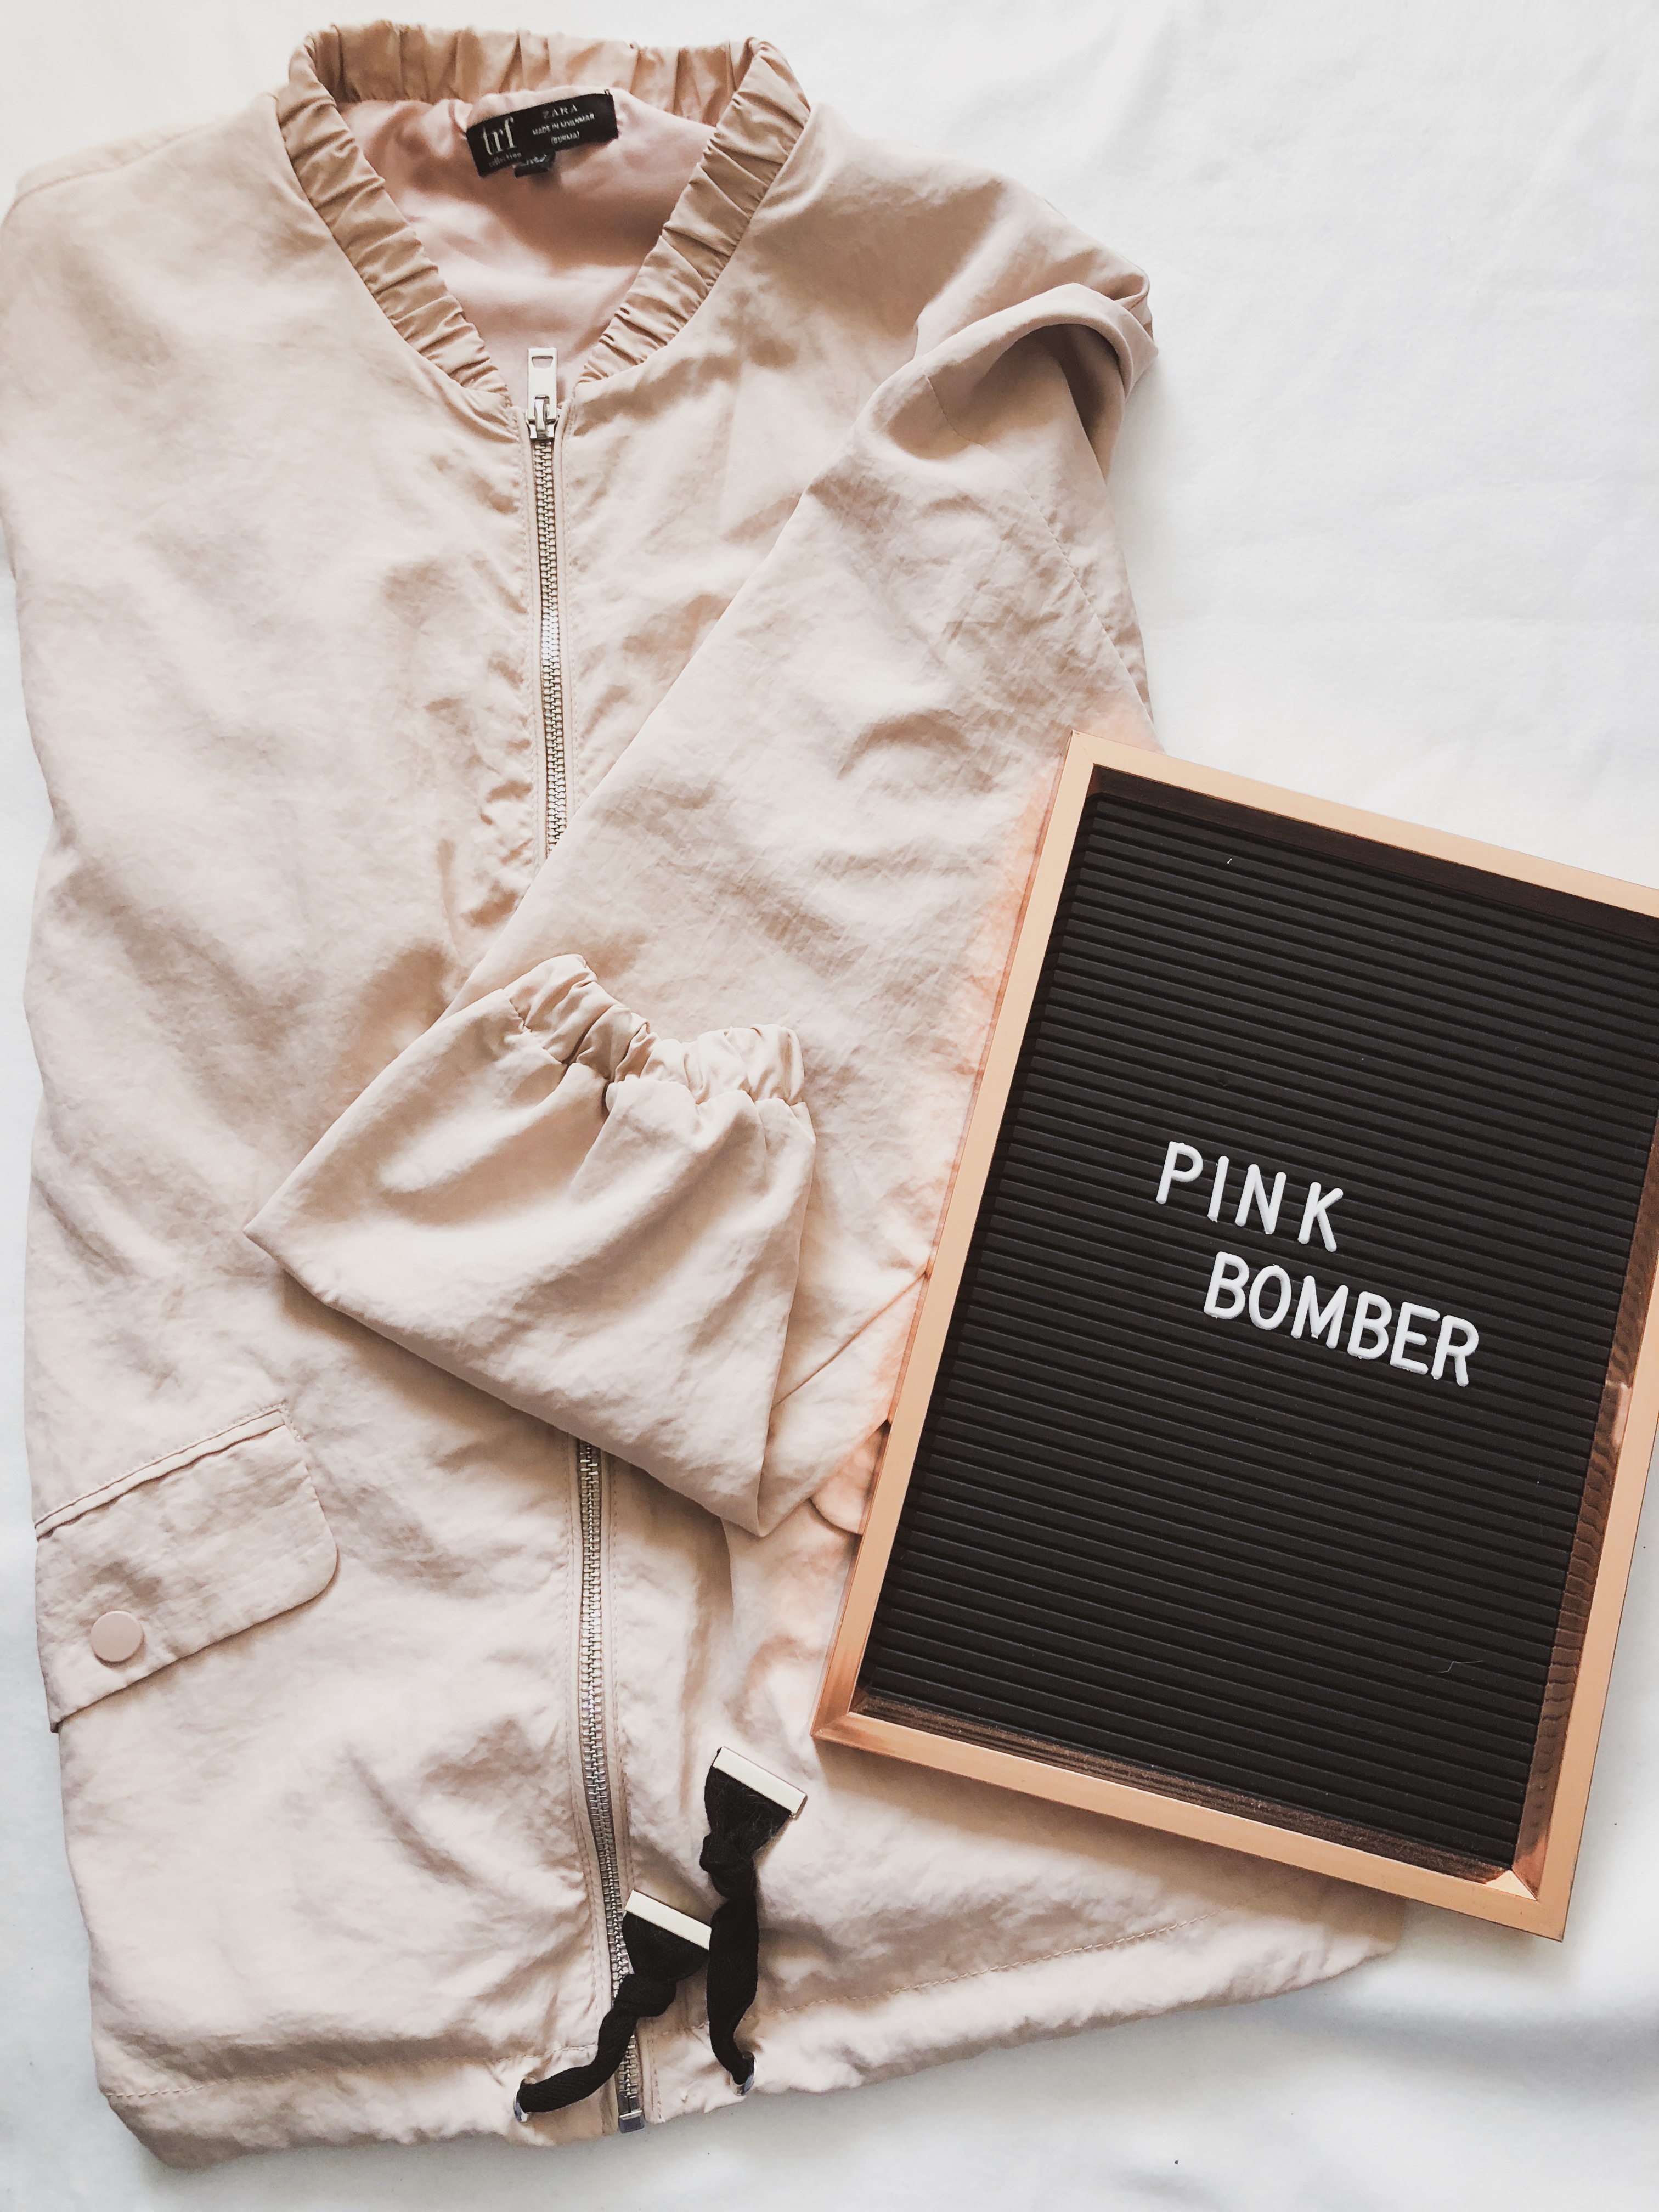 What I got in sales: Zara bomber jacket